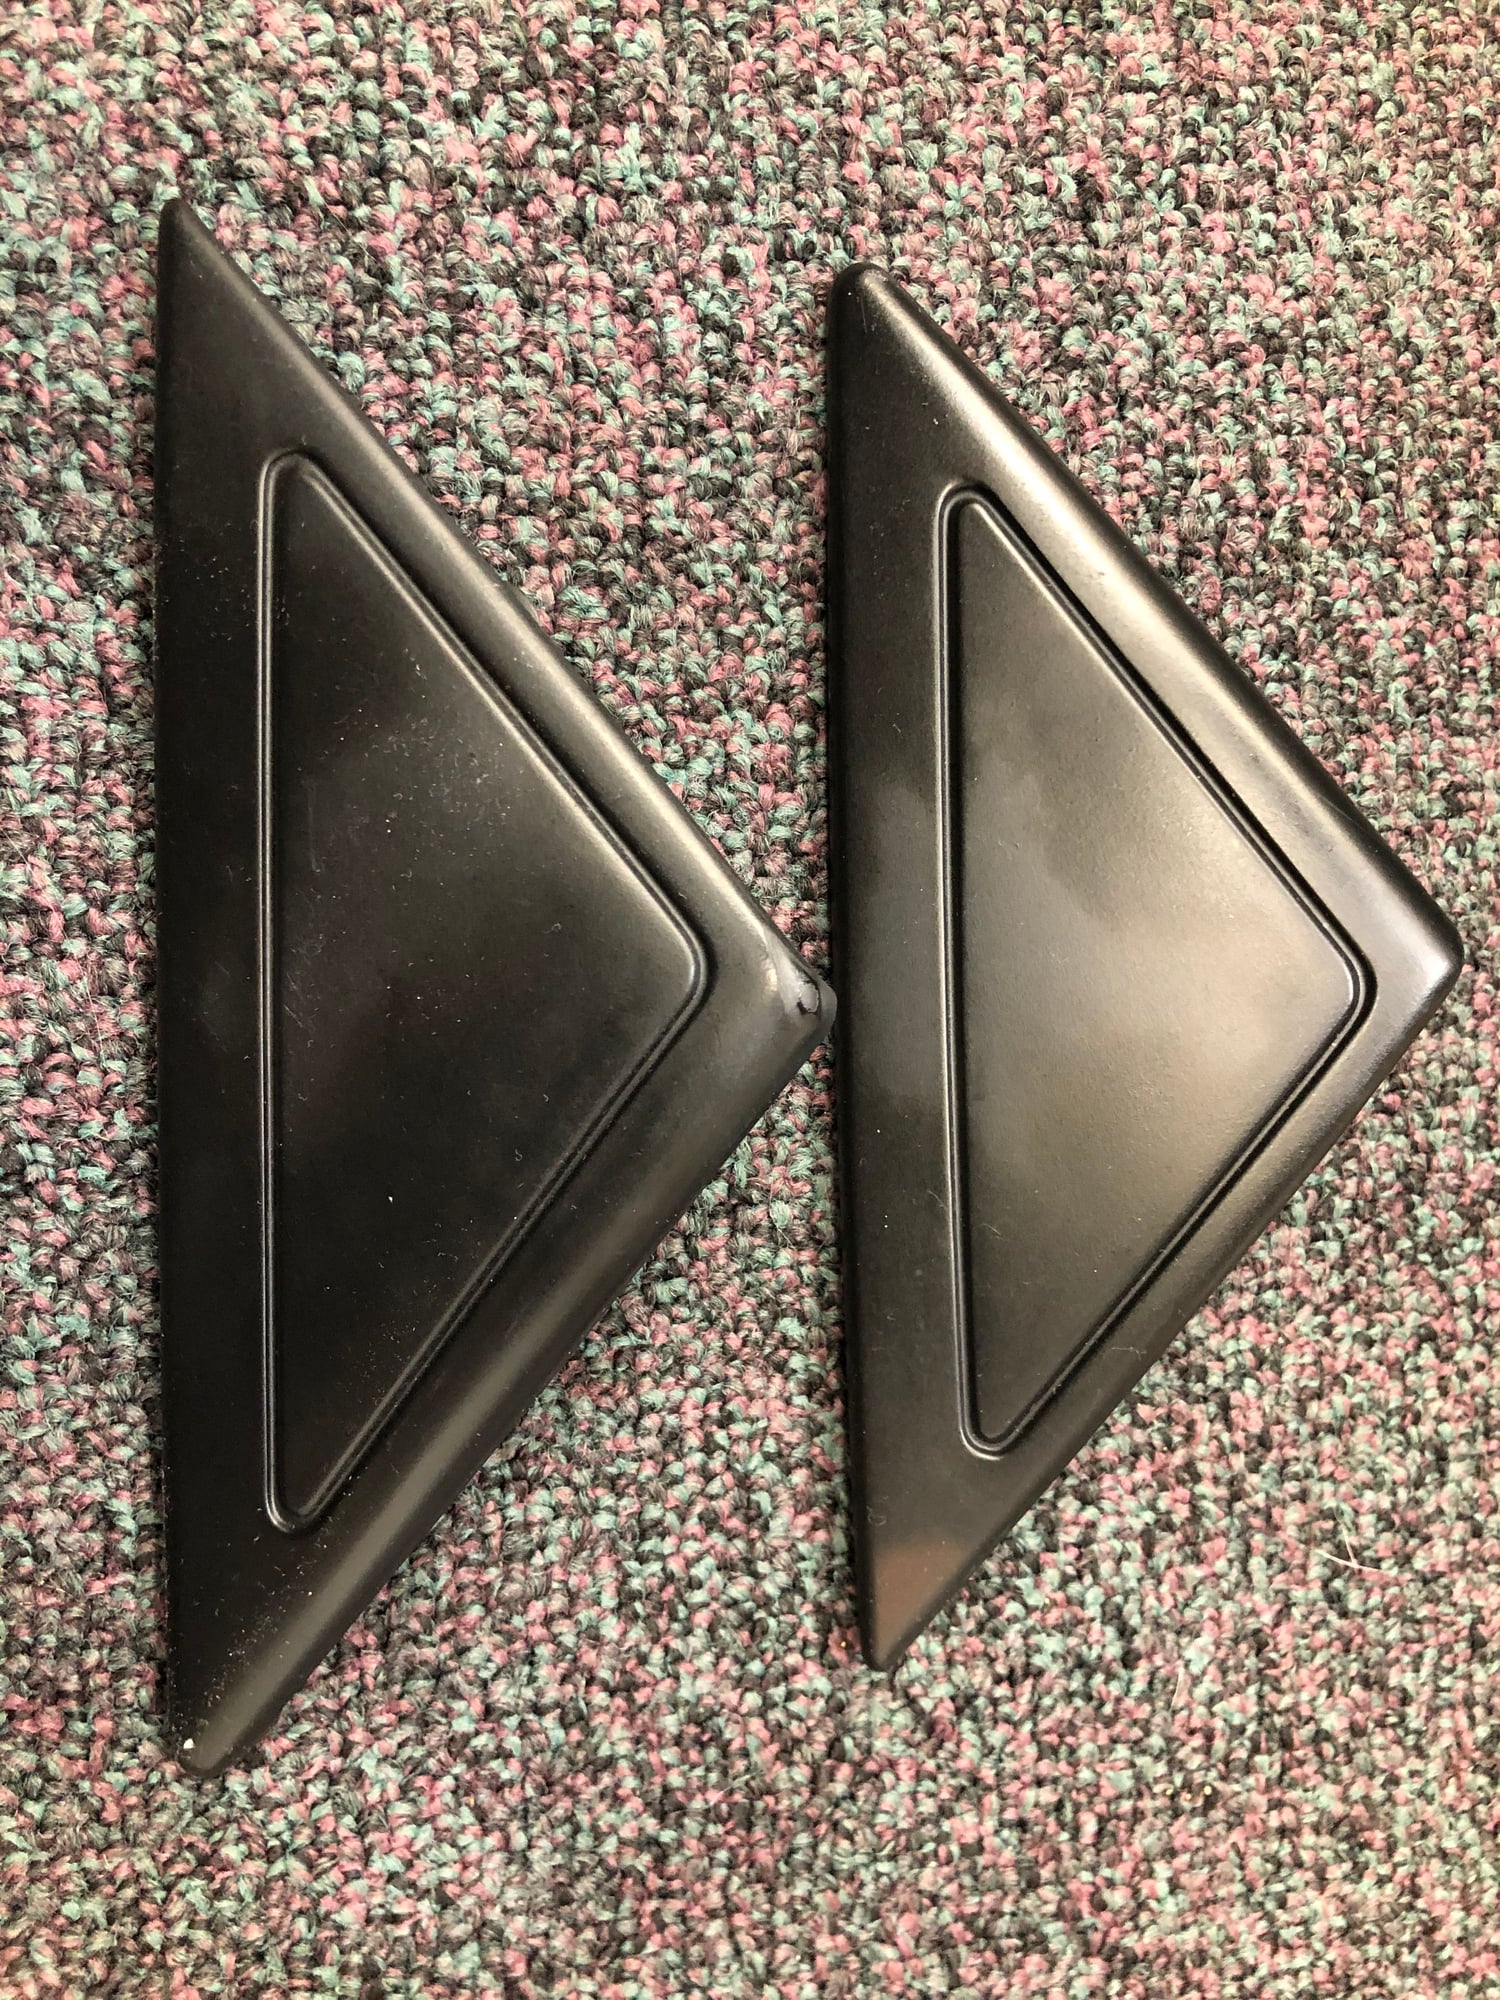 Exterior Body Parts - Exterior Door Triangles - Used - 1993 to 1995 Mazda RX-7 - San Jose, CA 95129, United States